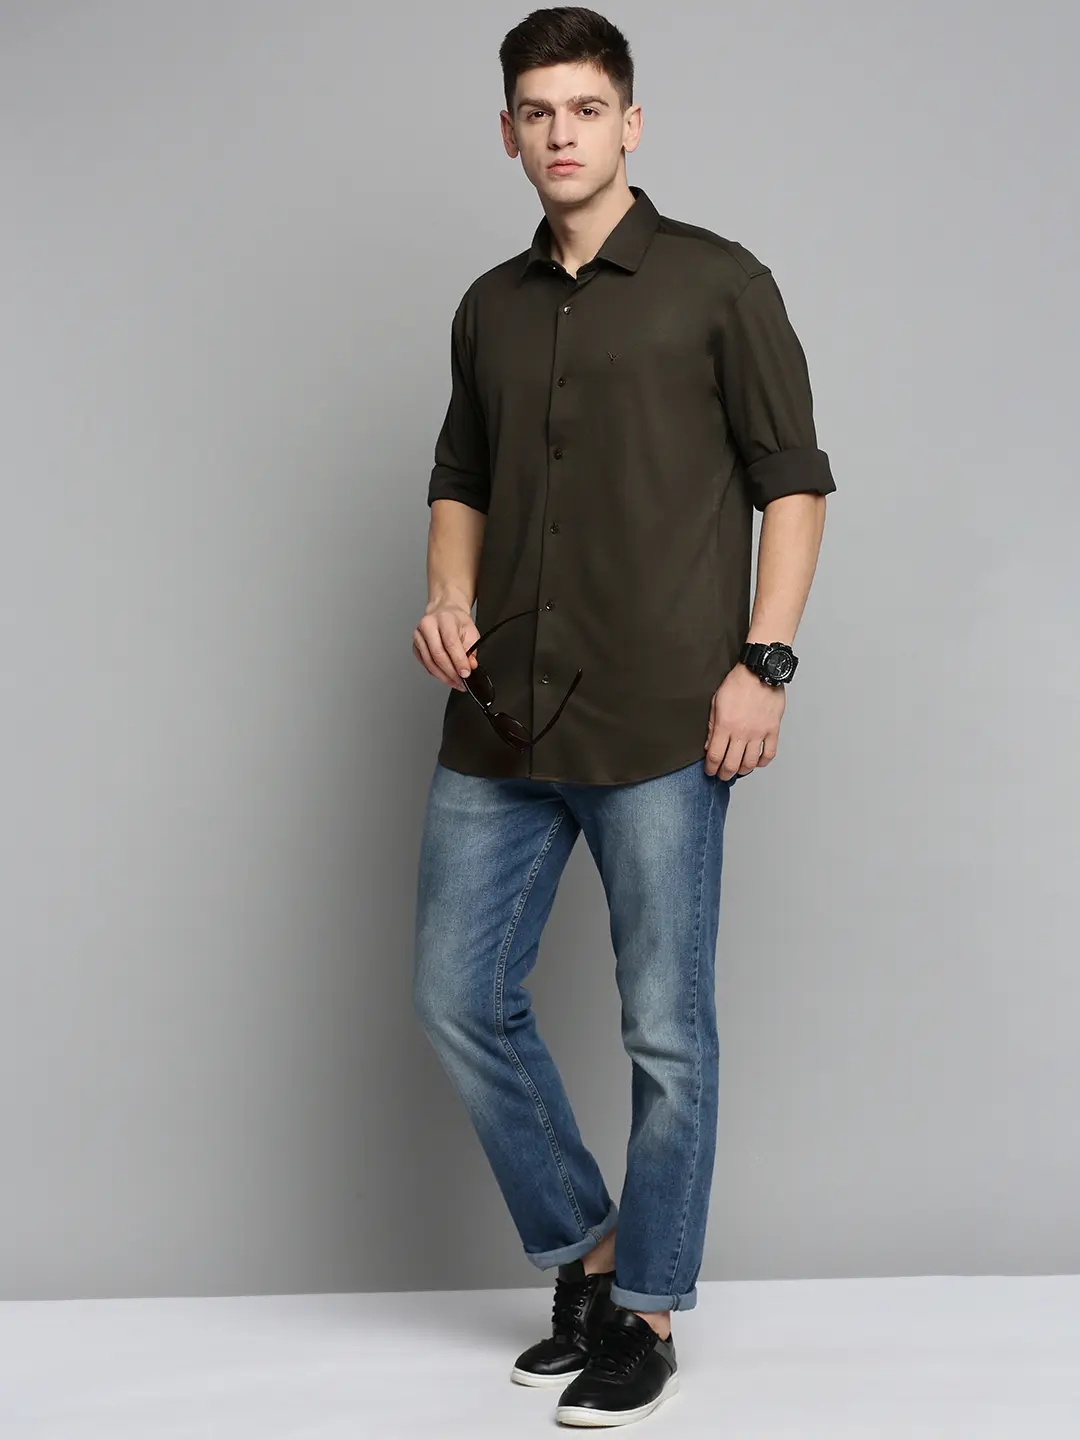 SHOWOFF Men's Spread Collar Olive Solid Shirt